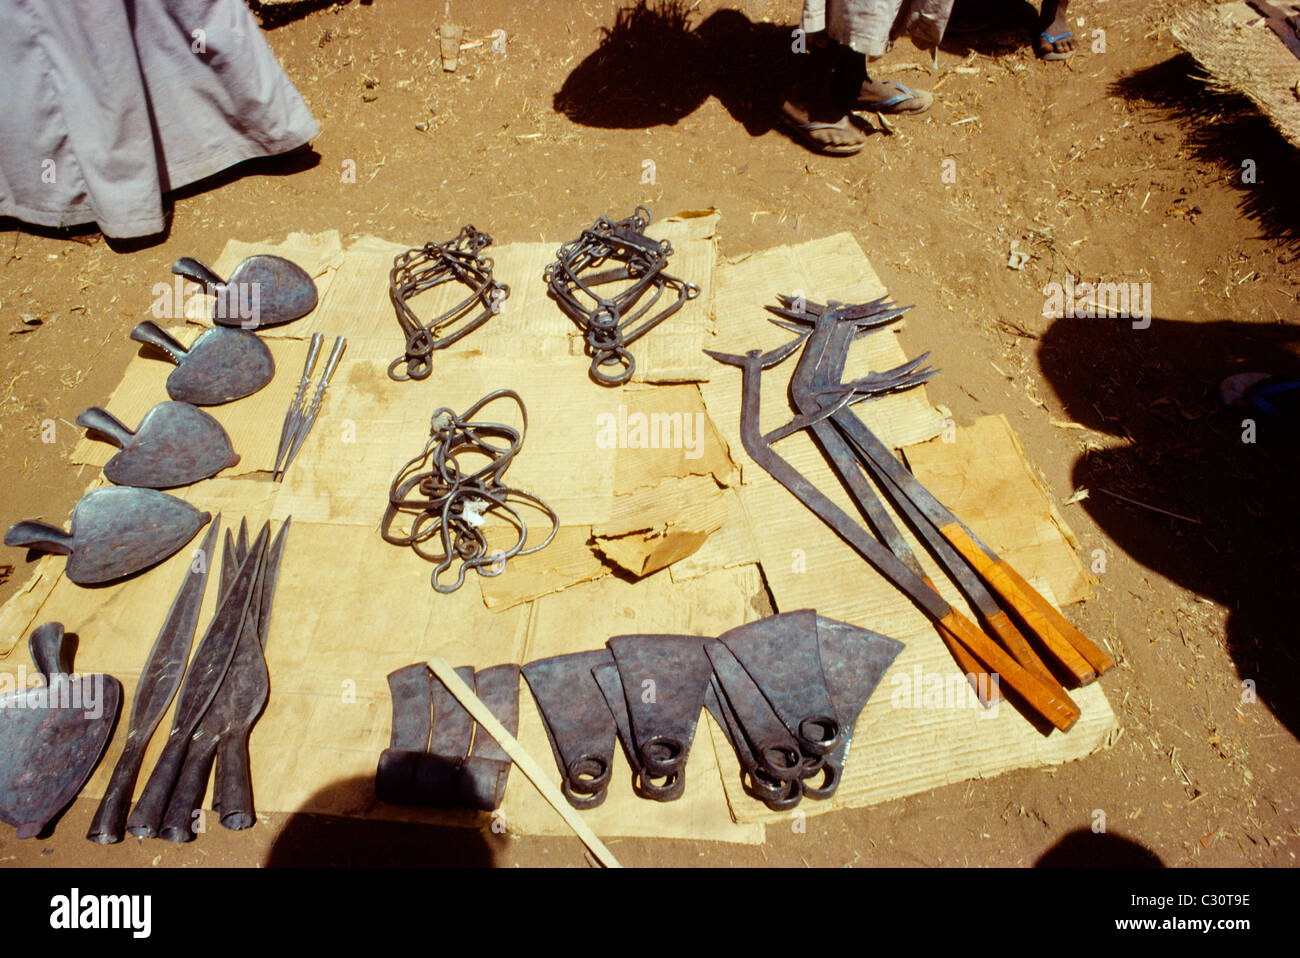 El Geneina Sudan Tools Made By Chadian Blacksmith Refugee Stock Photo